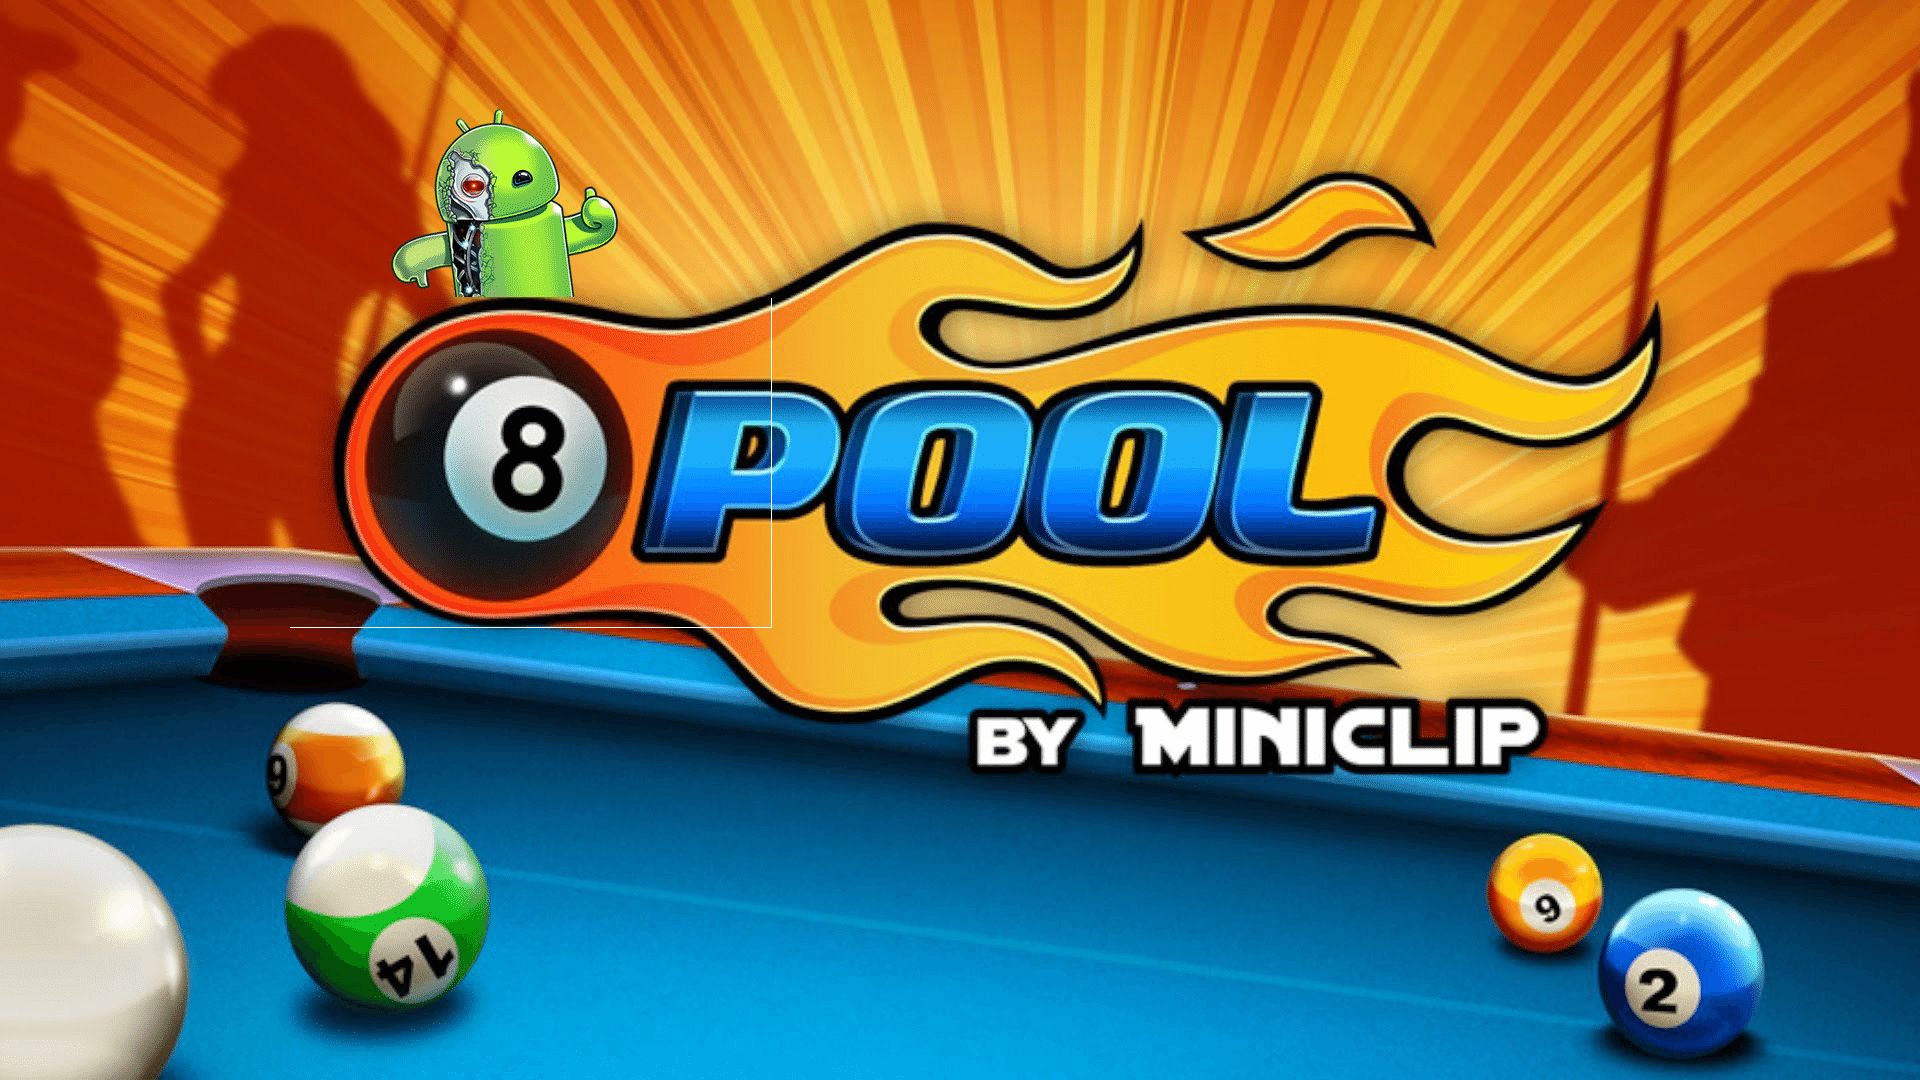 8 Ball Pool v3.9.1 MOD APK - Eu Sou Android - 1920 x 1080 png 625kB